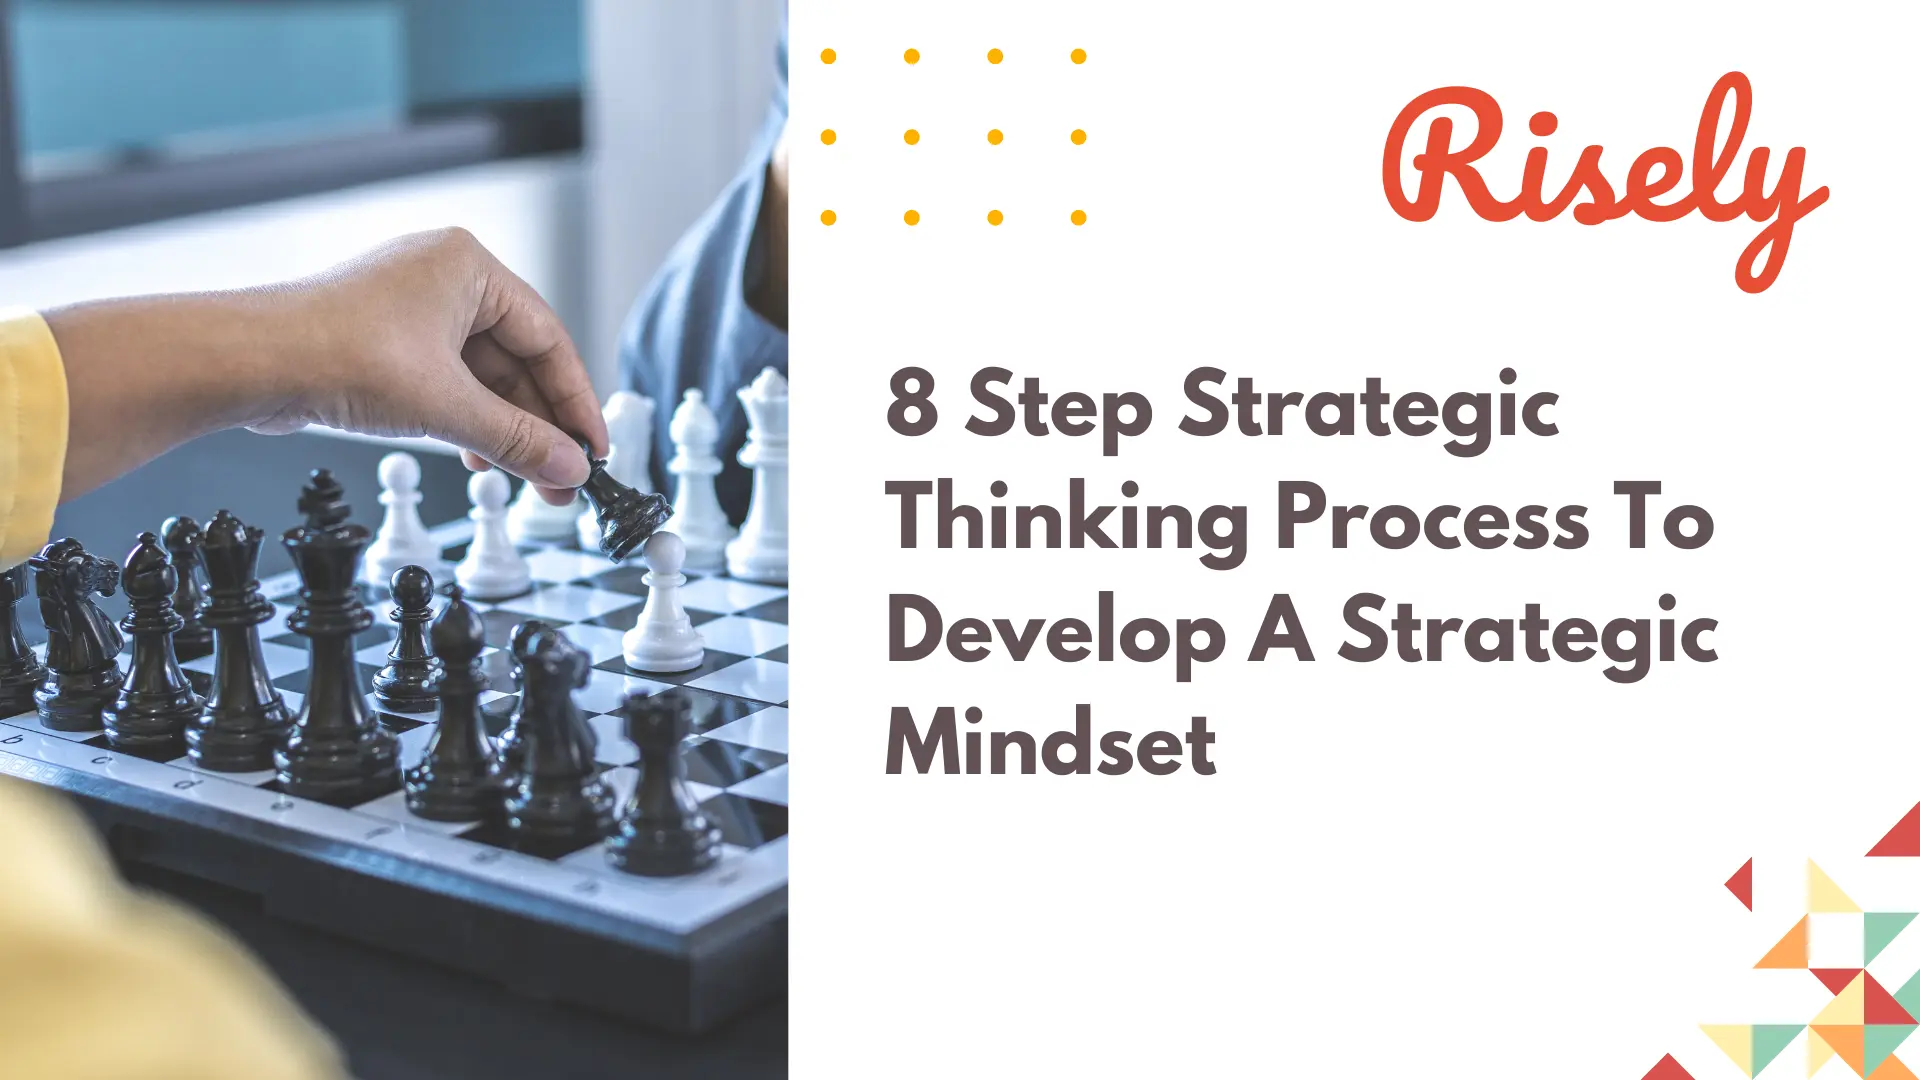 Strategic thinking process